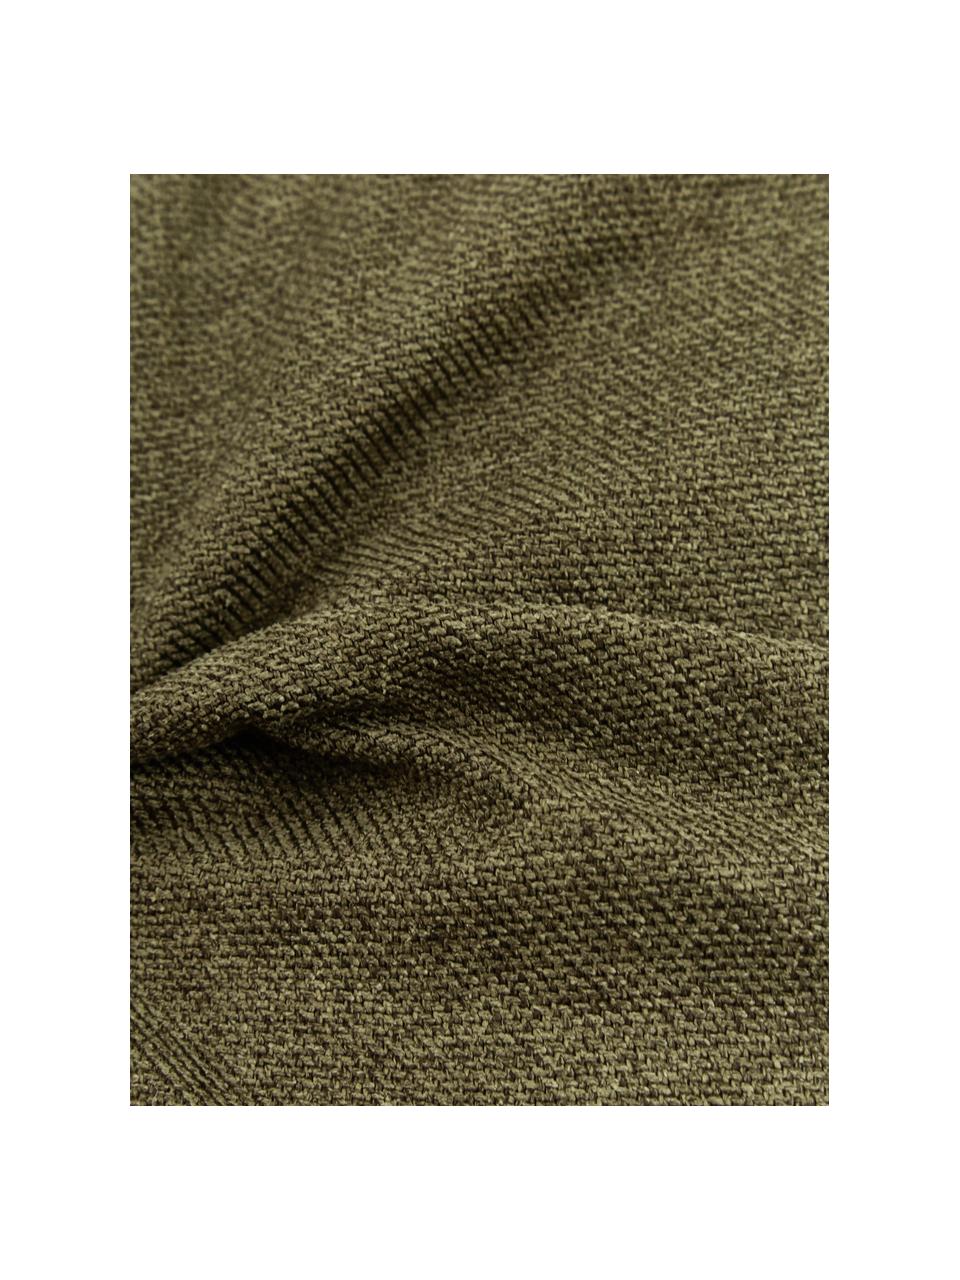 Sofa-Kissen Lennon in Grün, Bezug: 100% Polyester, Webstoff Grün, B 60 x L 60 cm